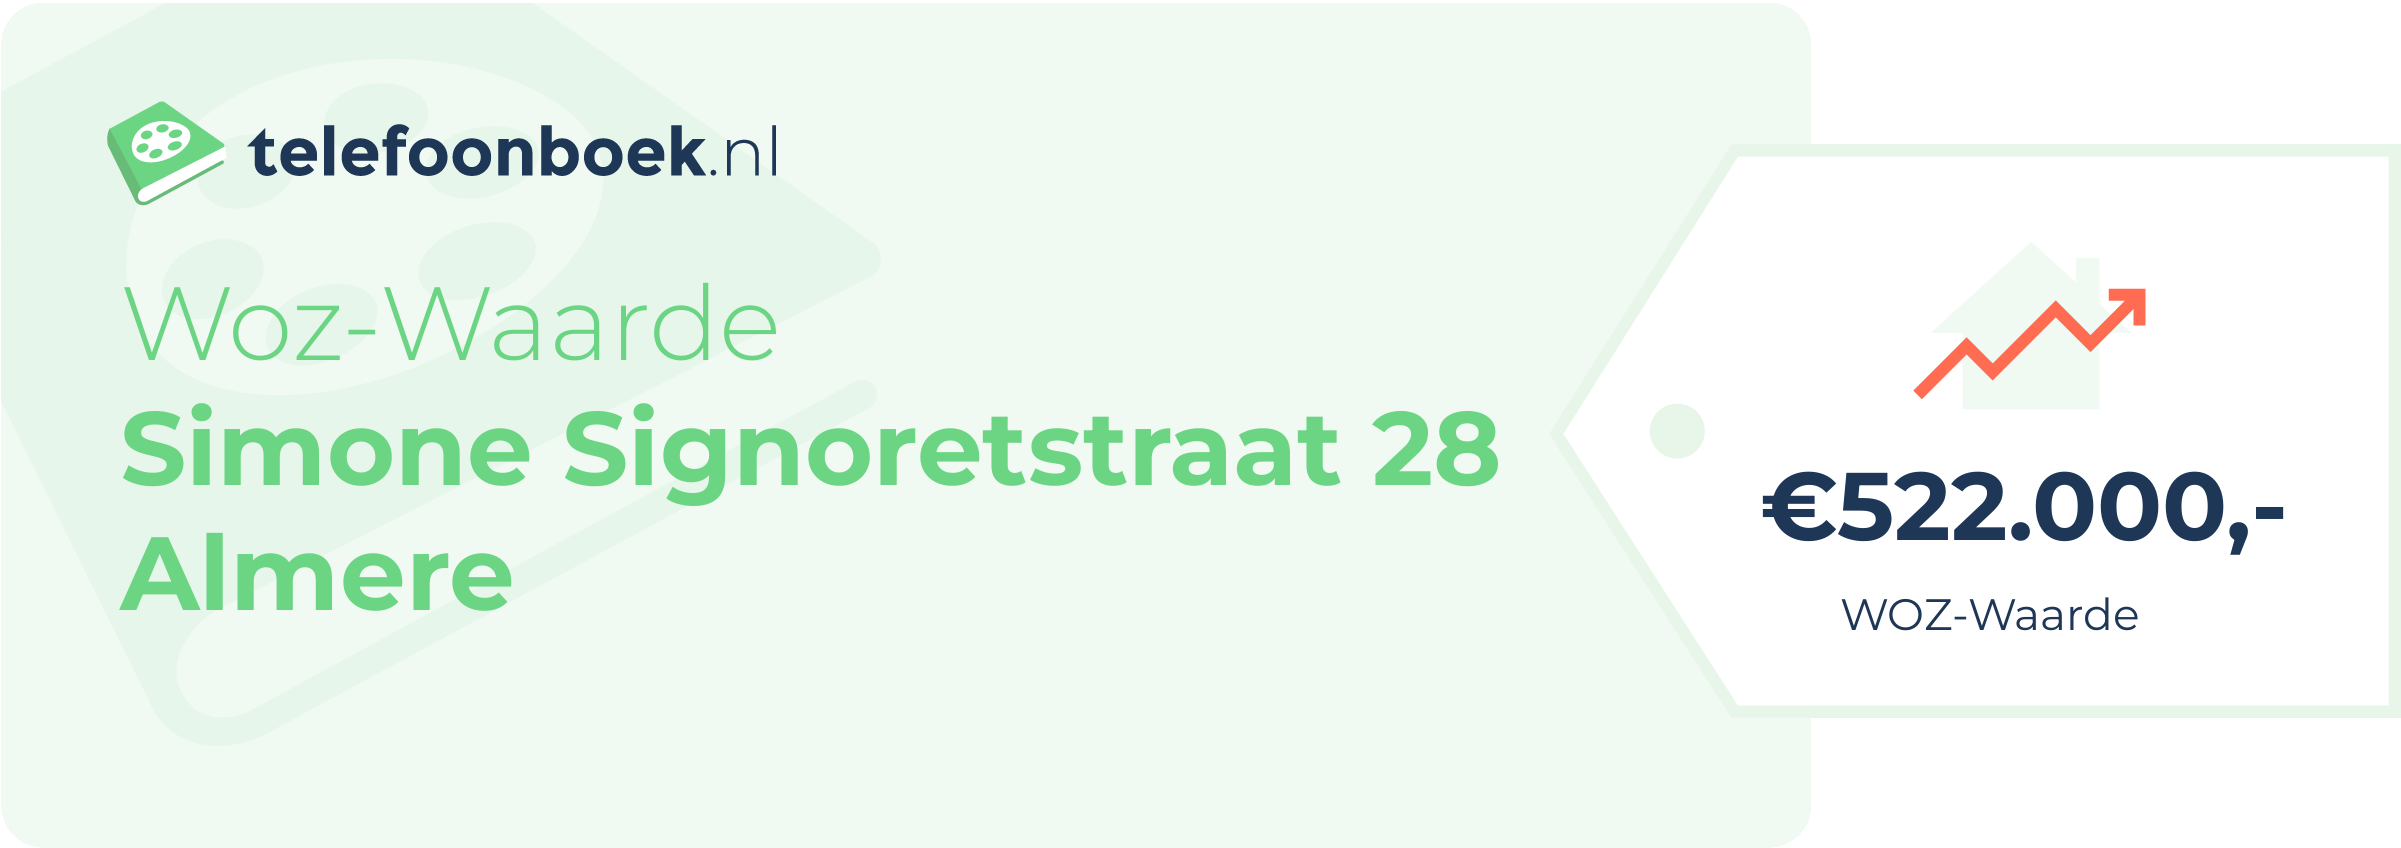 WOZ-waarde Simone Signoretstraat 28 Almere